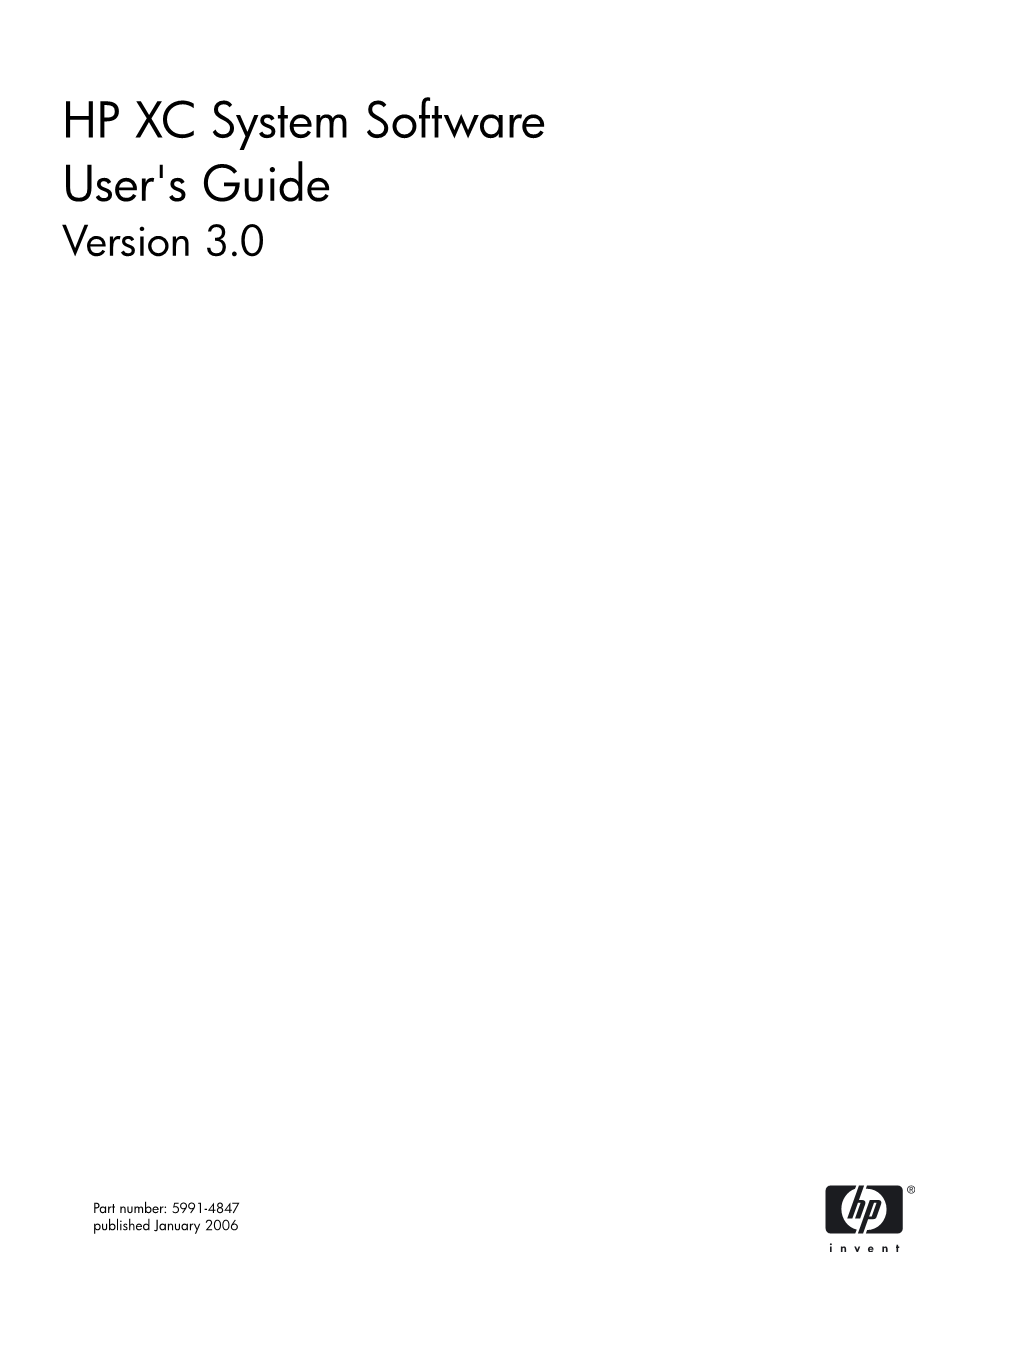 User's Guide Version 3.0